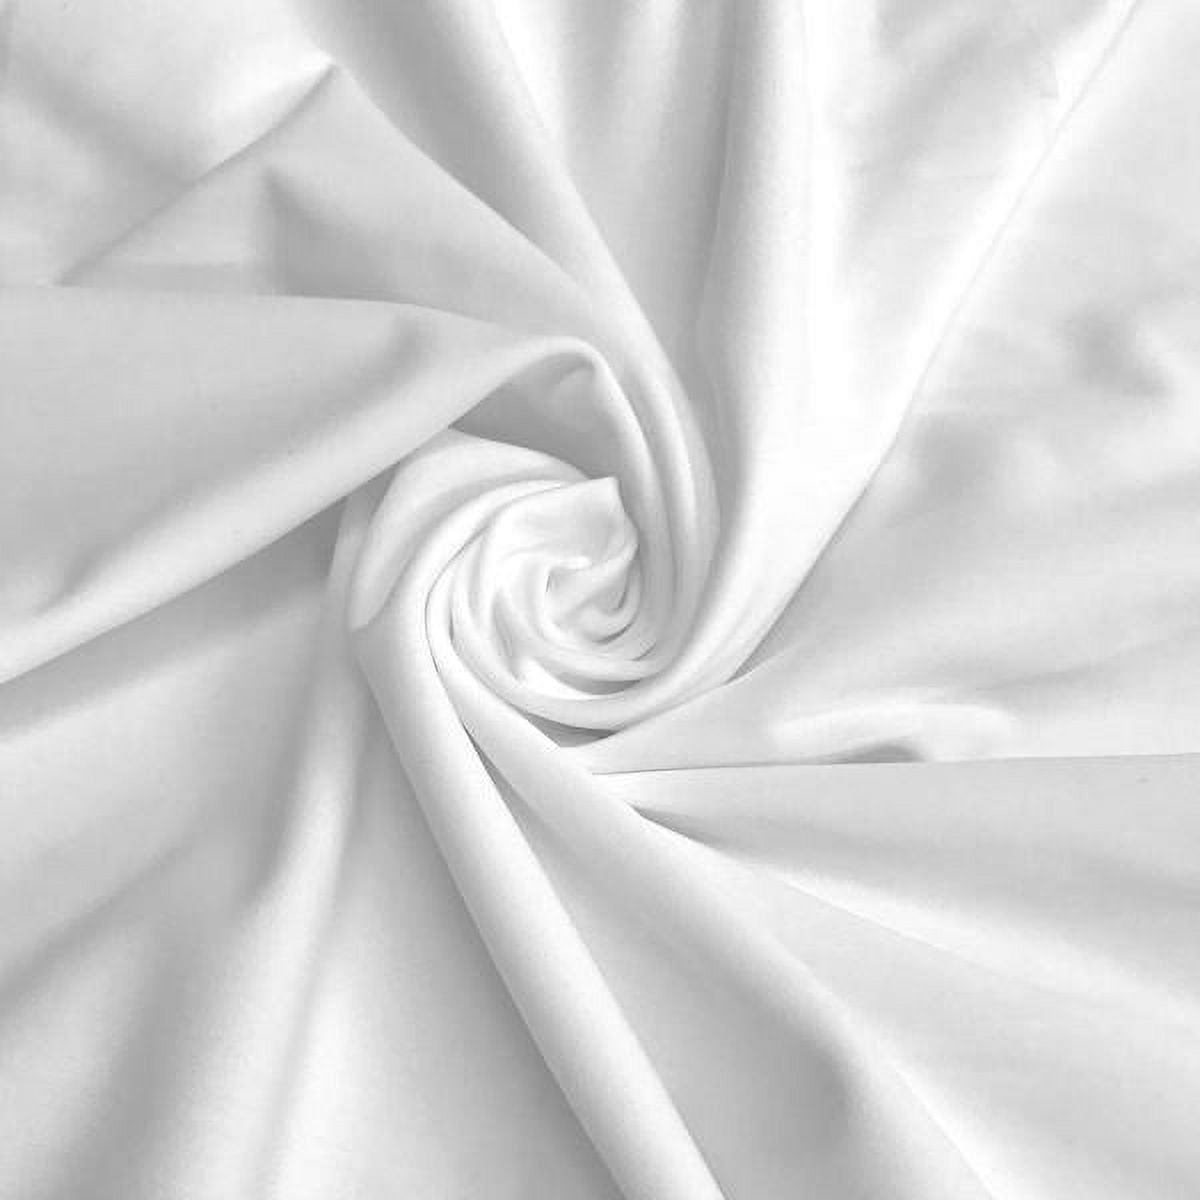 Spandex Nylon Lycra 4 Way Stretch Fabric W150cm/180-210gsm - Matt Finish  (Price per 1m)